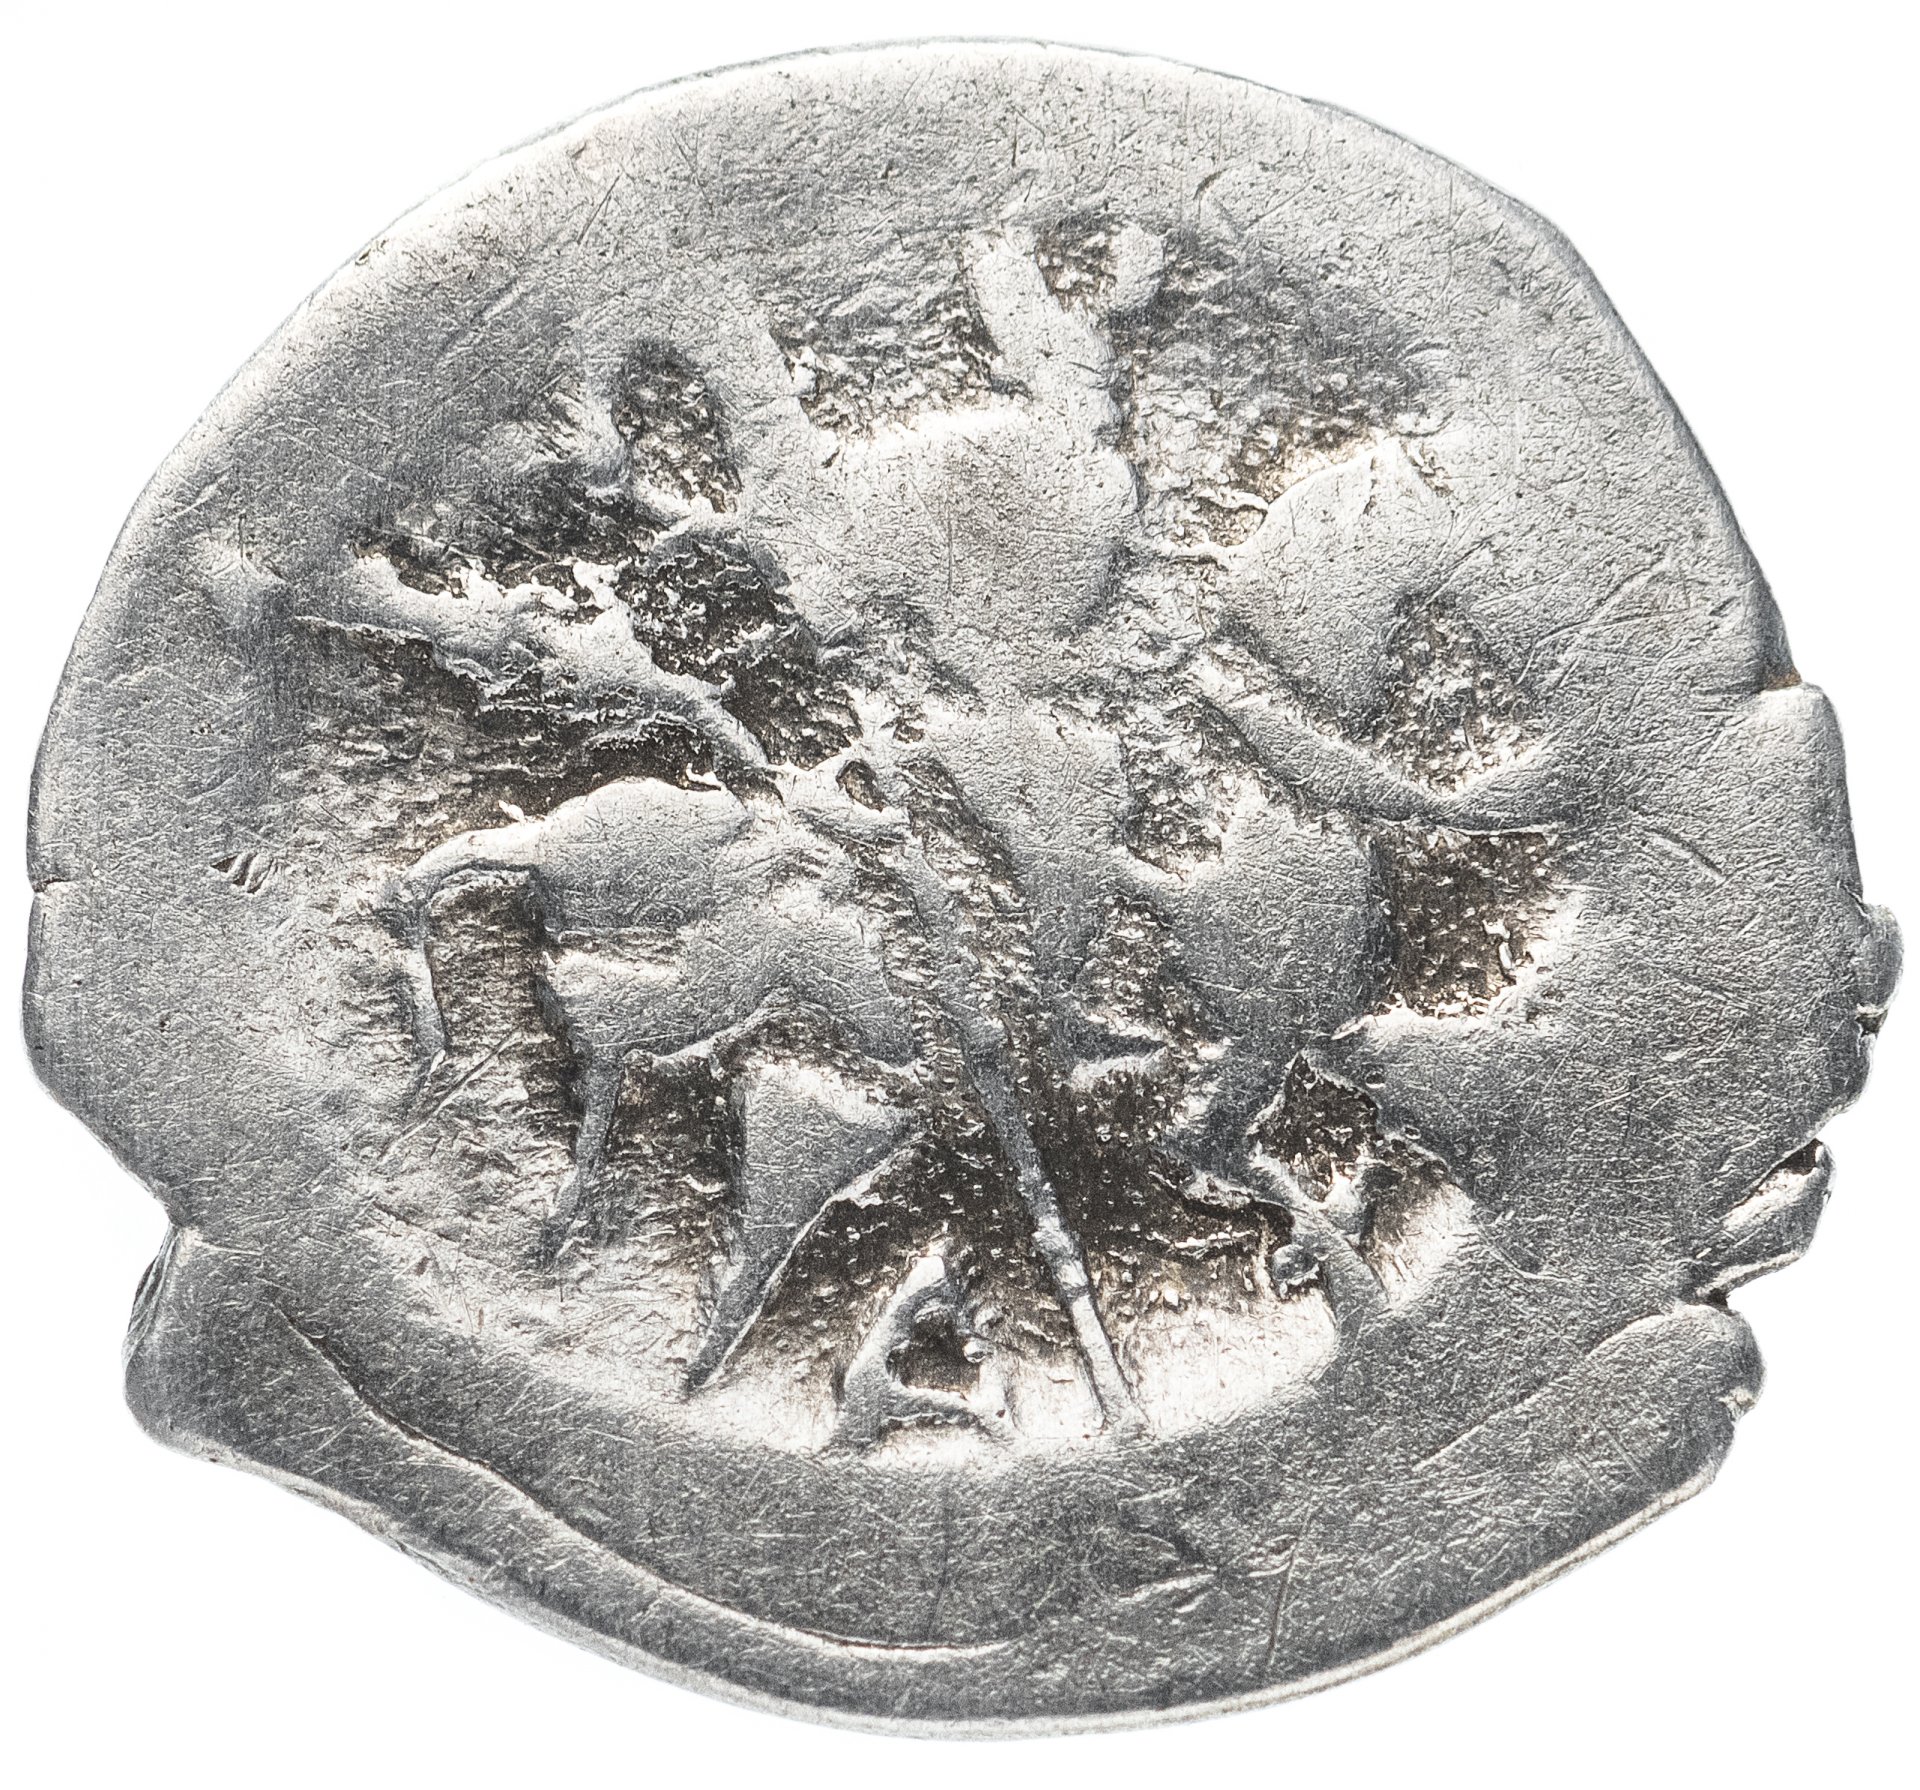 Серебряная монетка